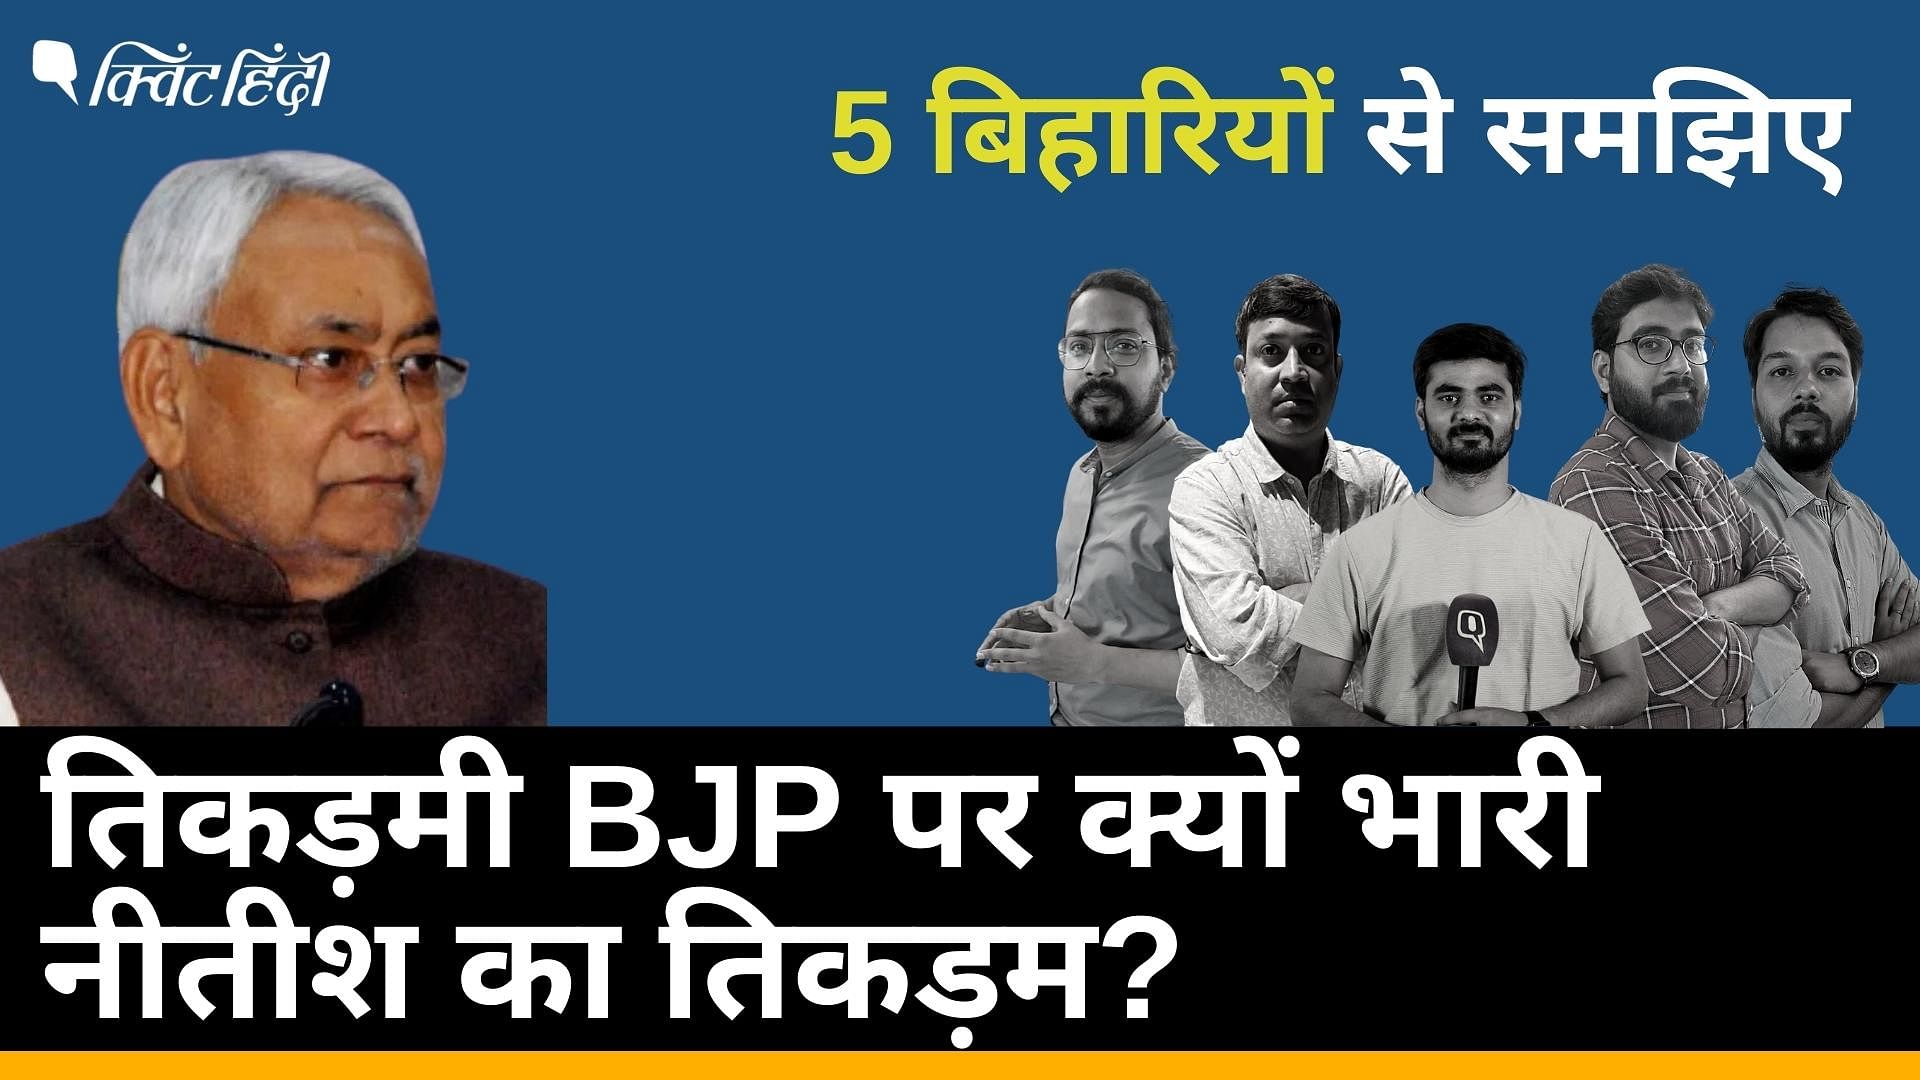 <div class="paragraphs"><p>Bihar Politics: Nitish Kumar की तिकड़म नीति, 5 बिहारी पत्रकारों से जानिए</p></div>